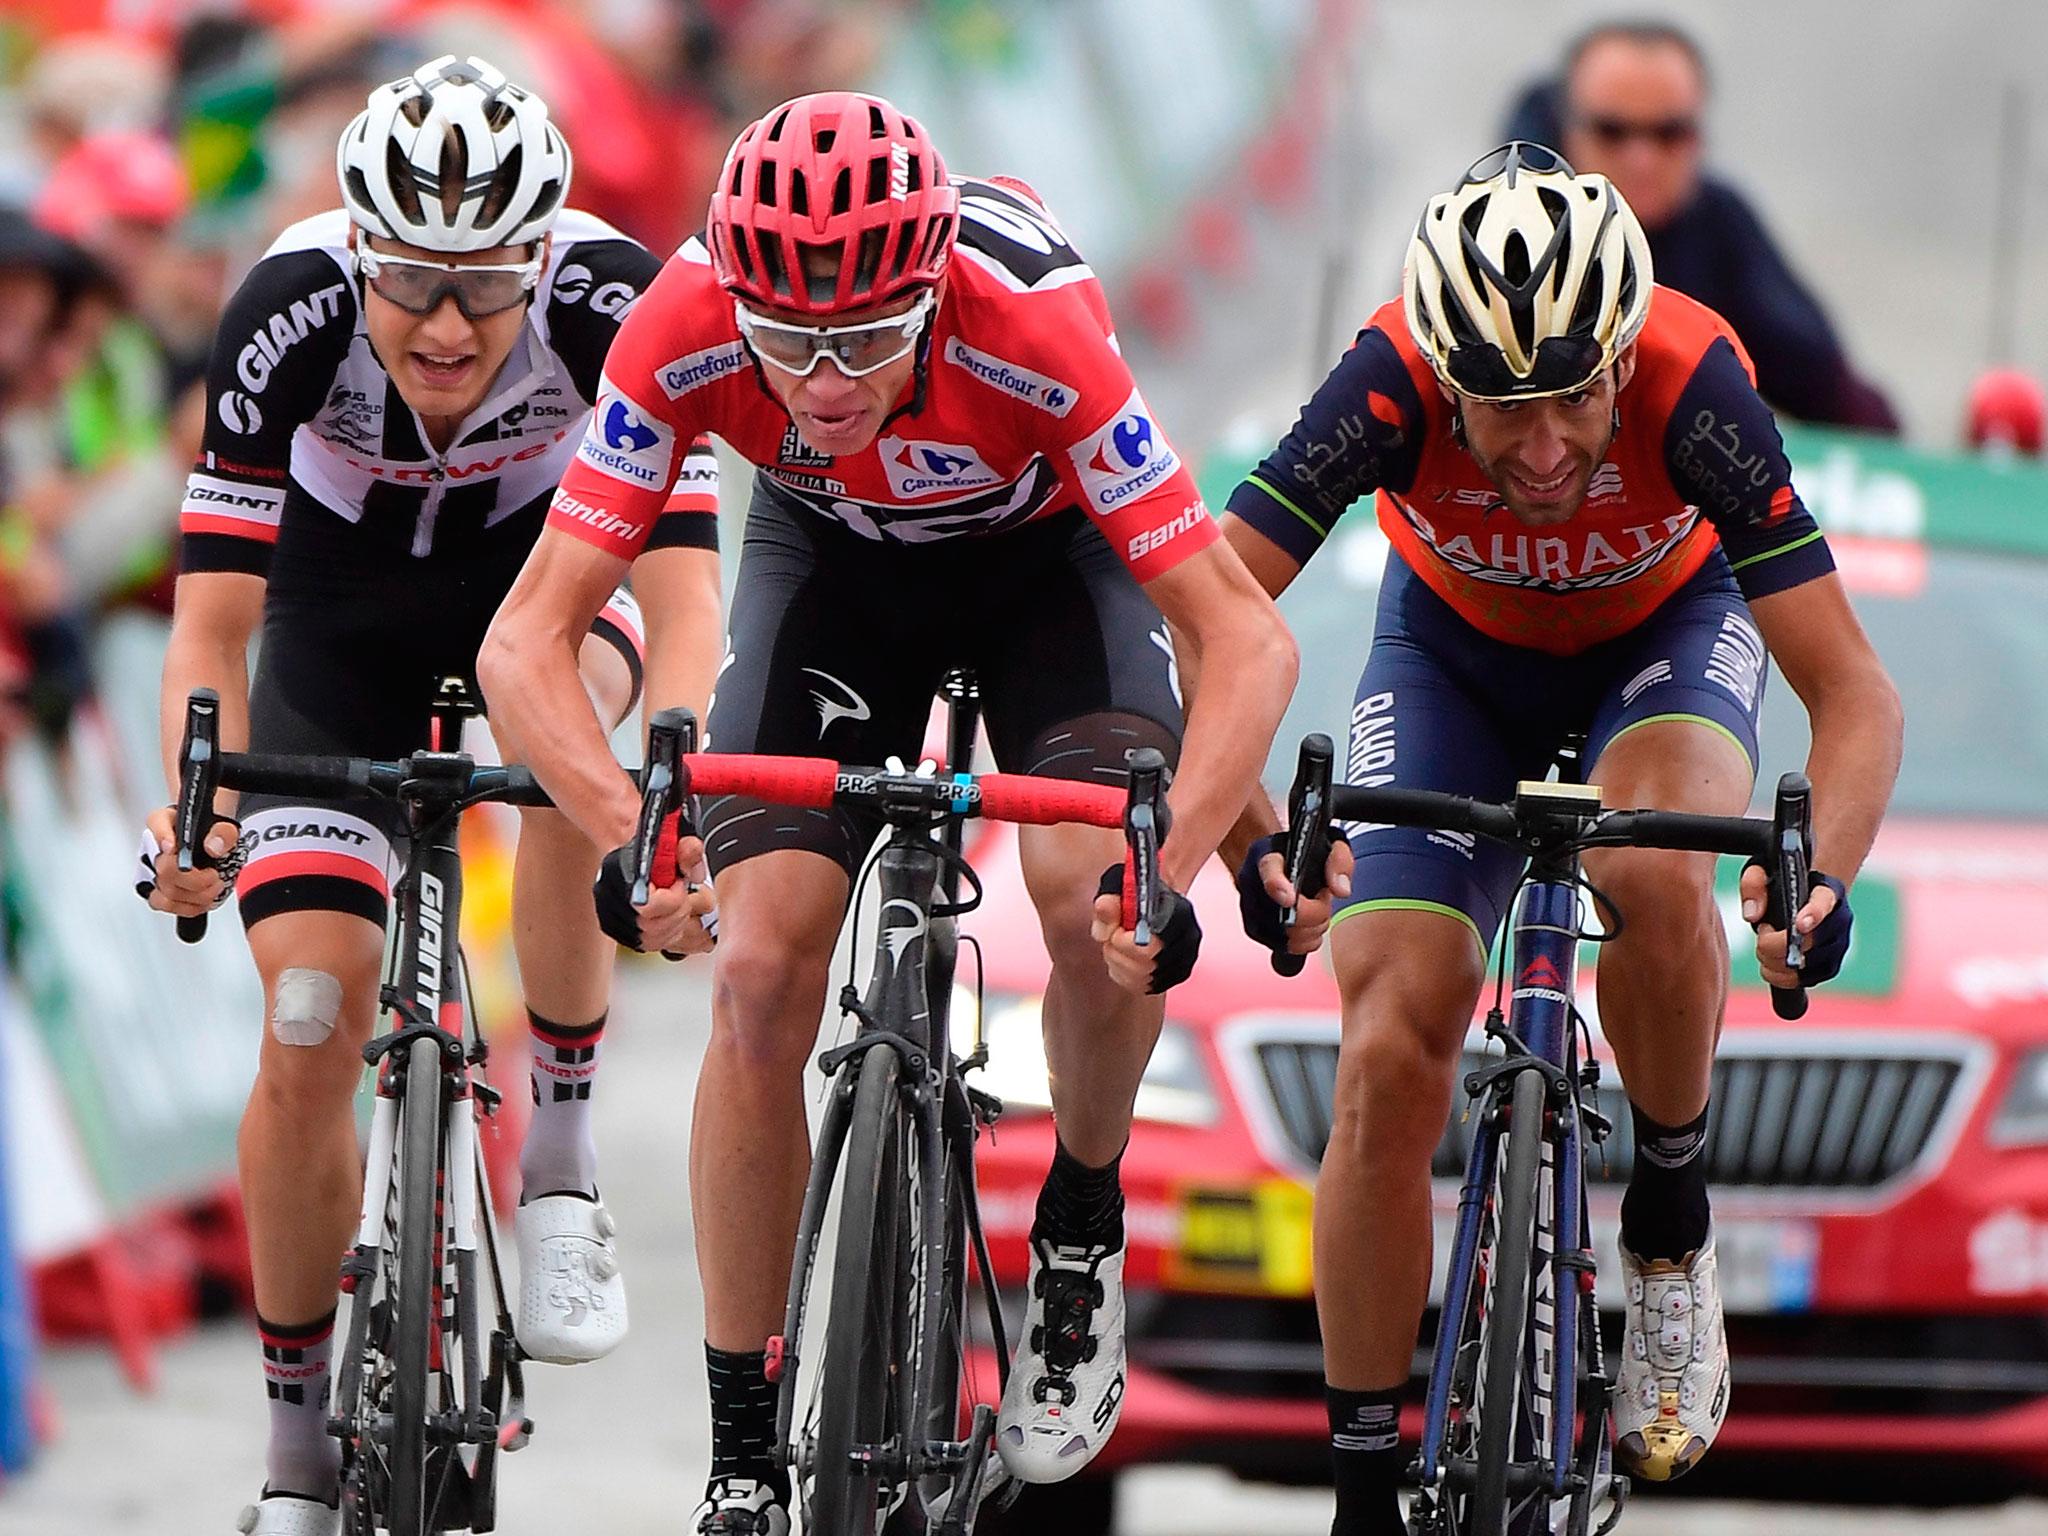 Chris Froome has his sights set on the demanding La Vuelta and Tour de France double